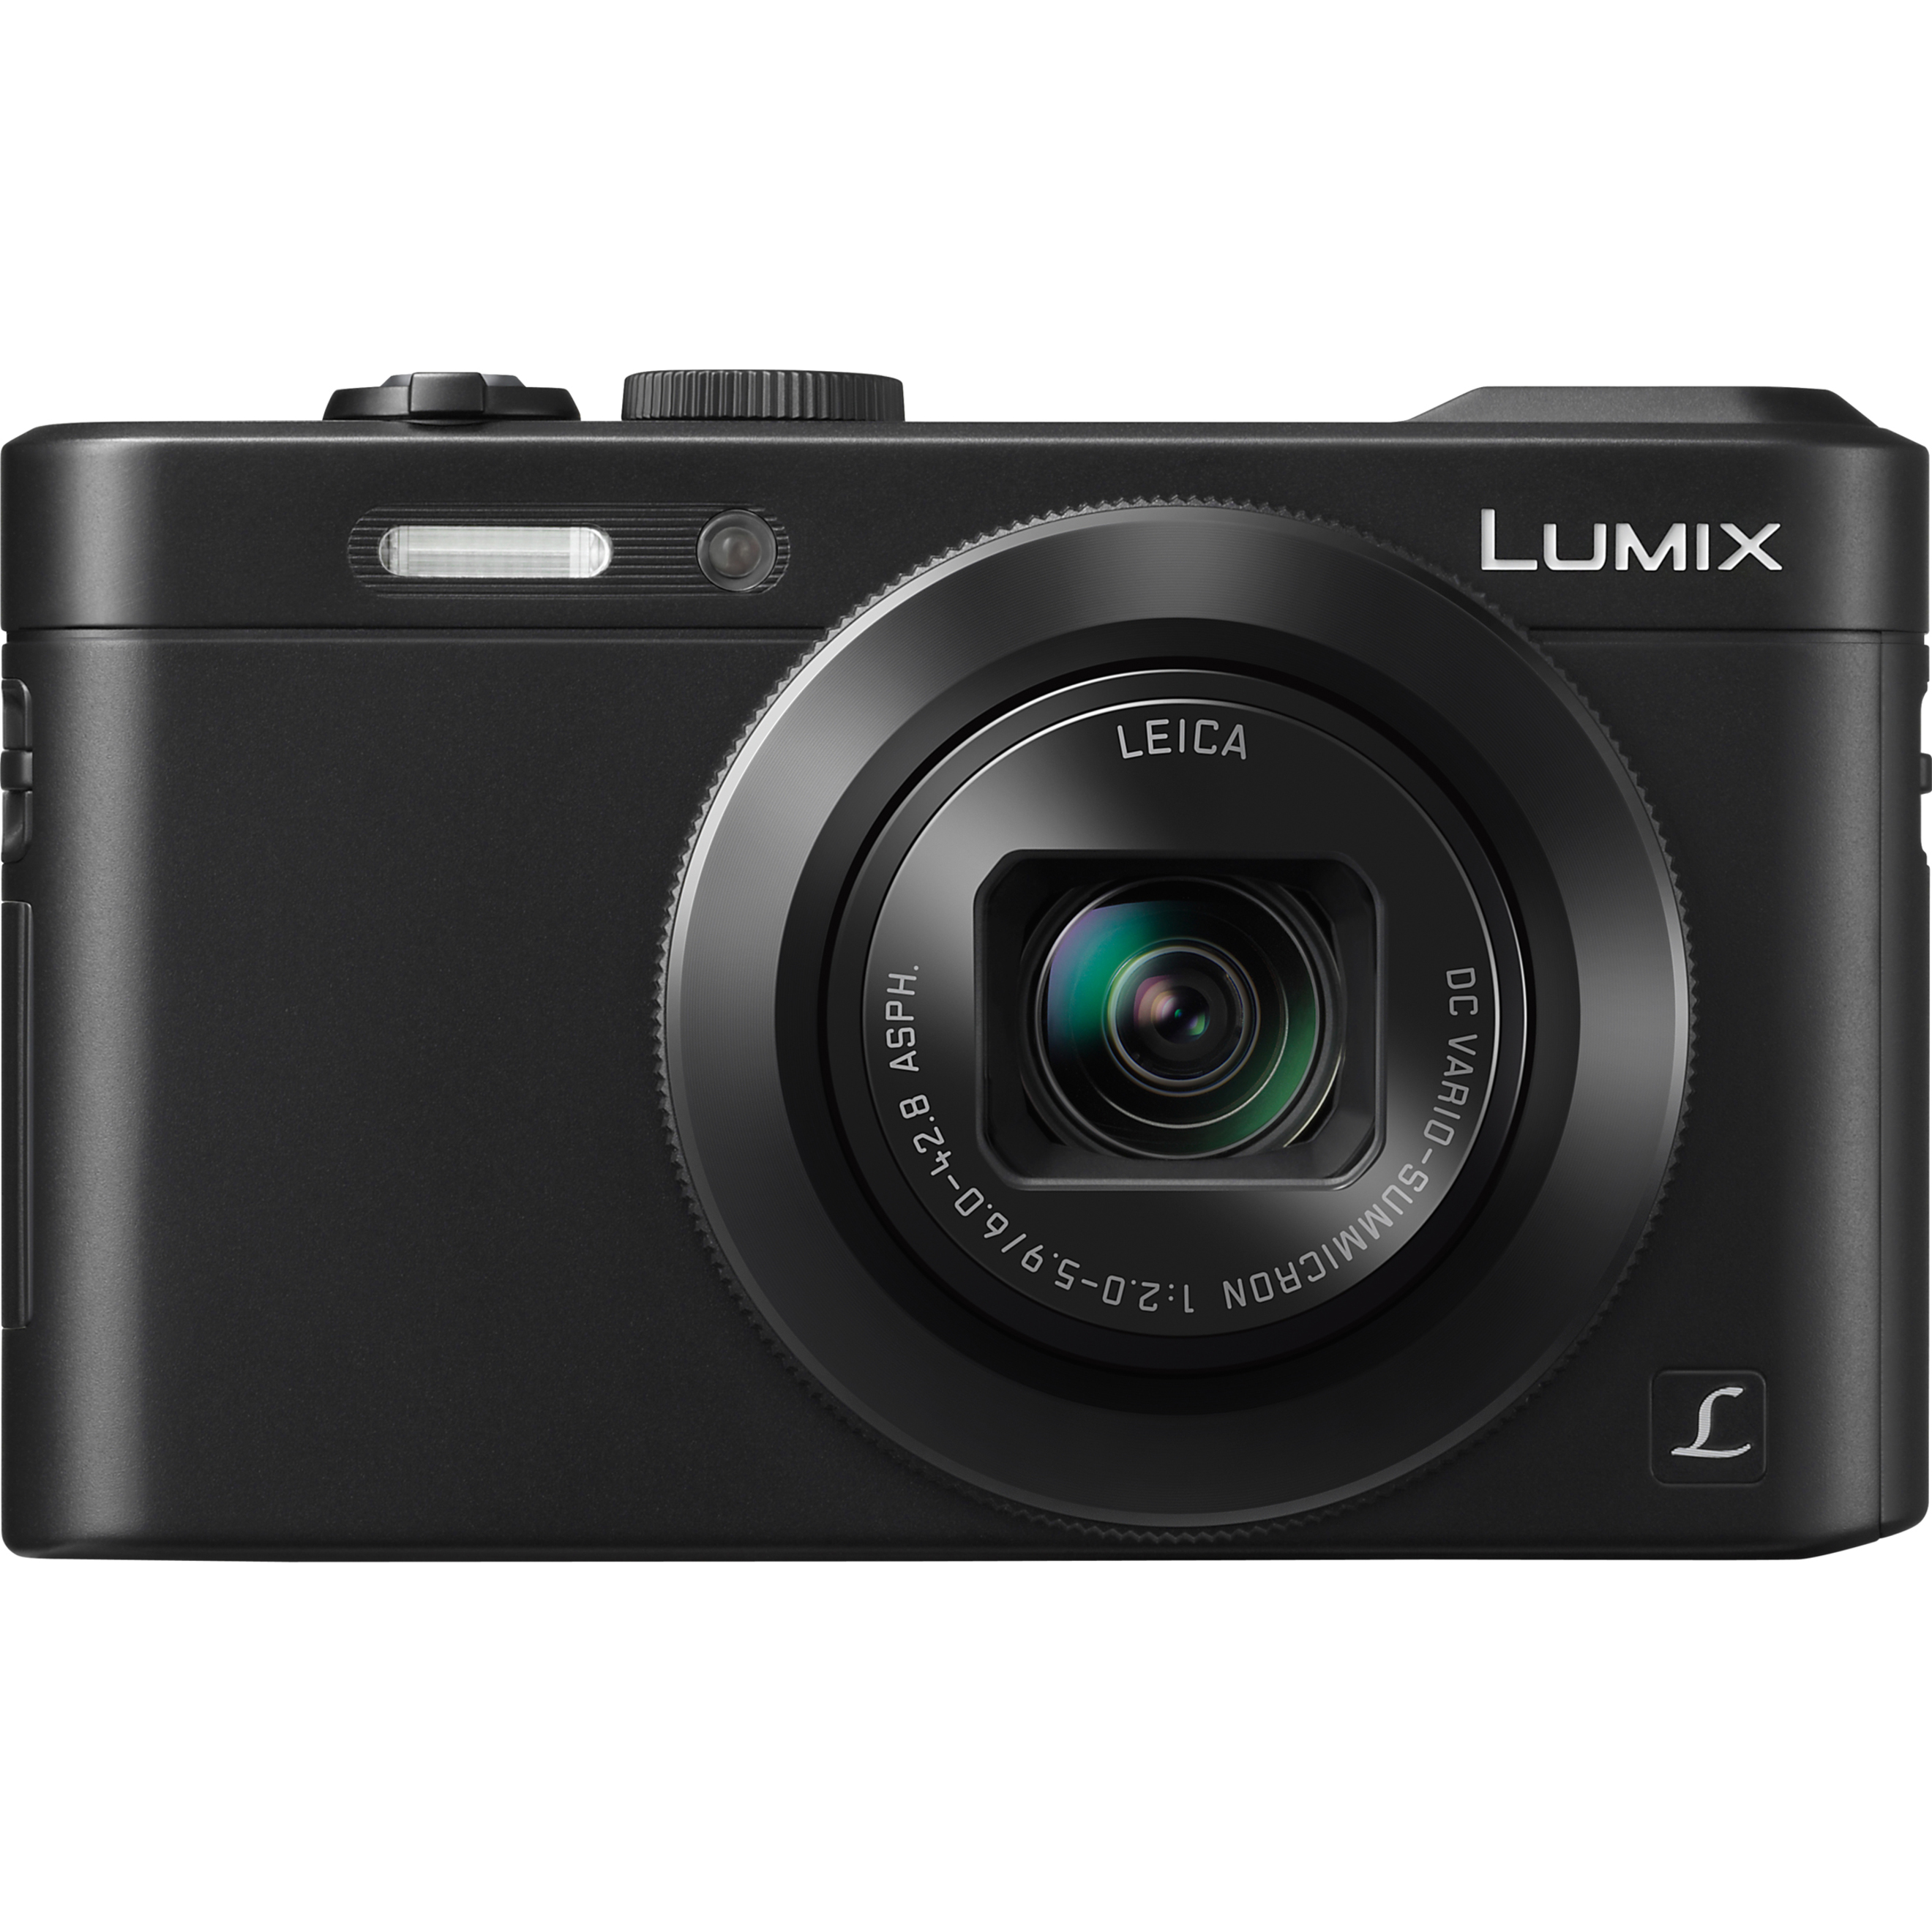 Panasonic Lumix DMC-LF1 12.1 Megapixel Bridge Camera, Black - image 1 of 5